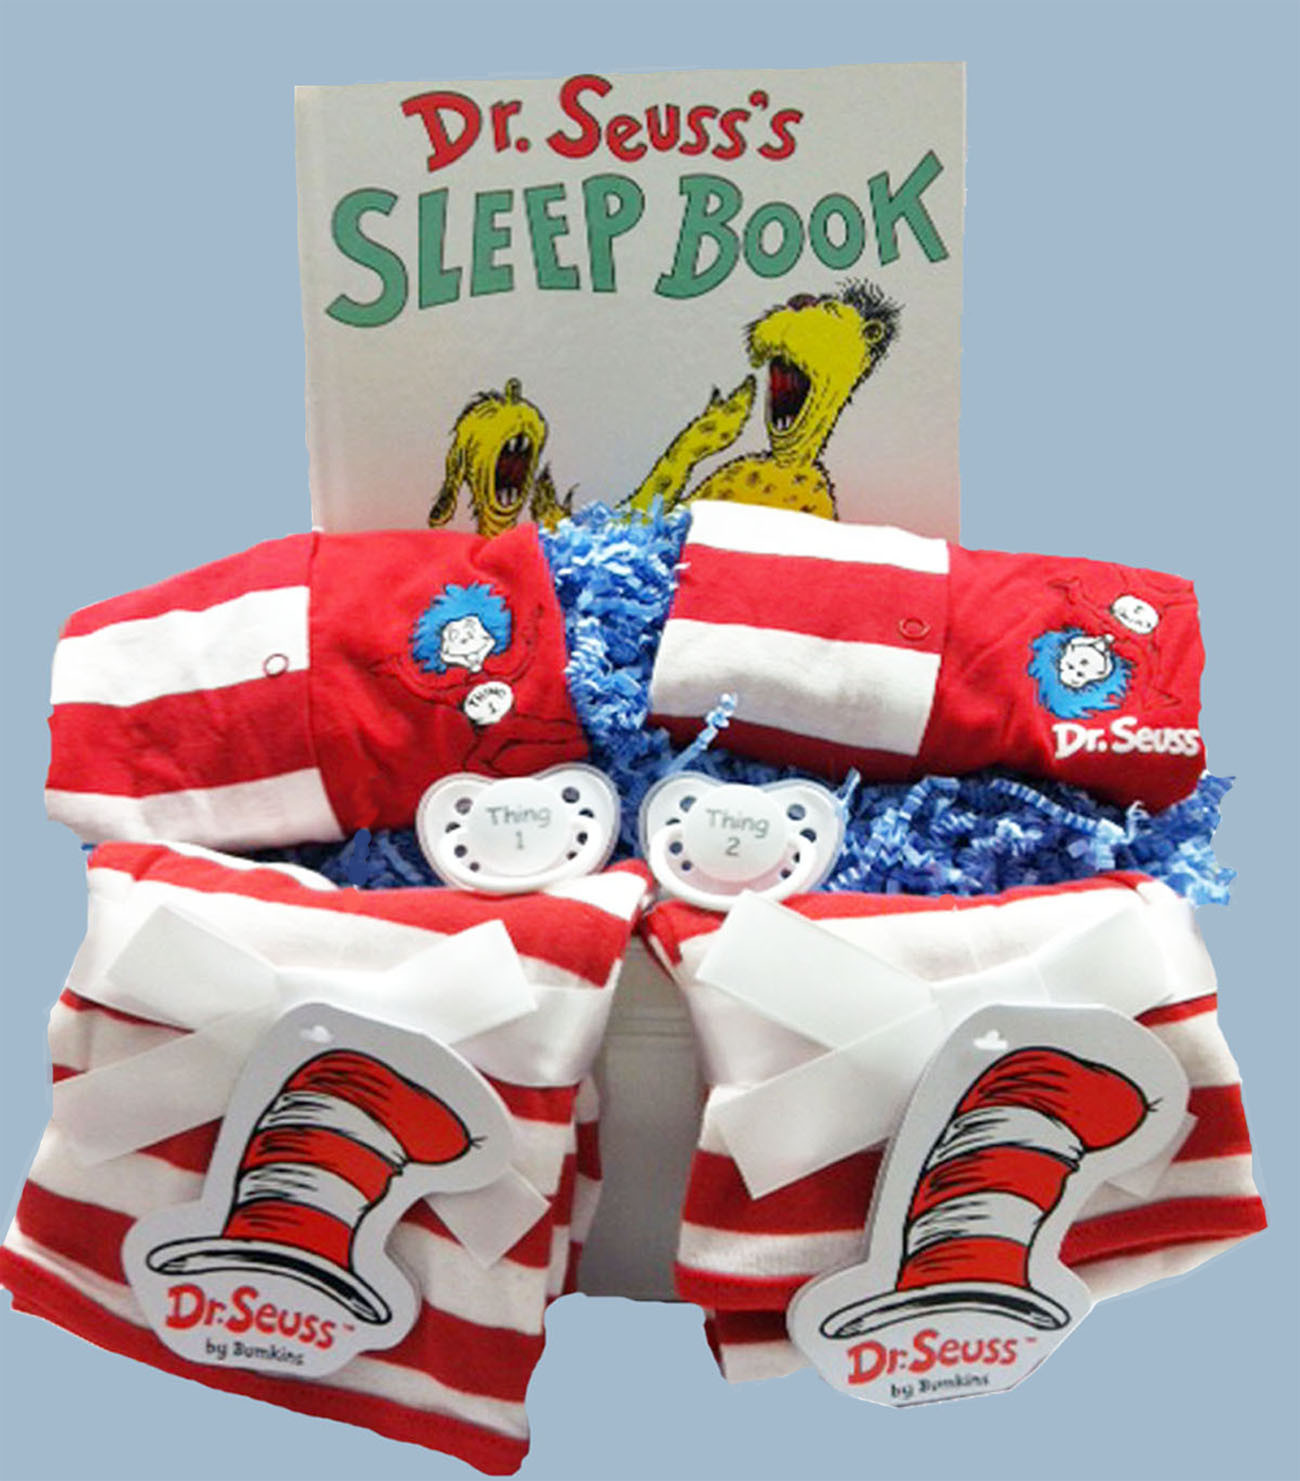 Dr Seuss Baby Gift Ideas
 Sonogram Announcement Cards For Twins Dr Seuss